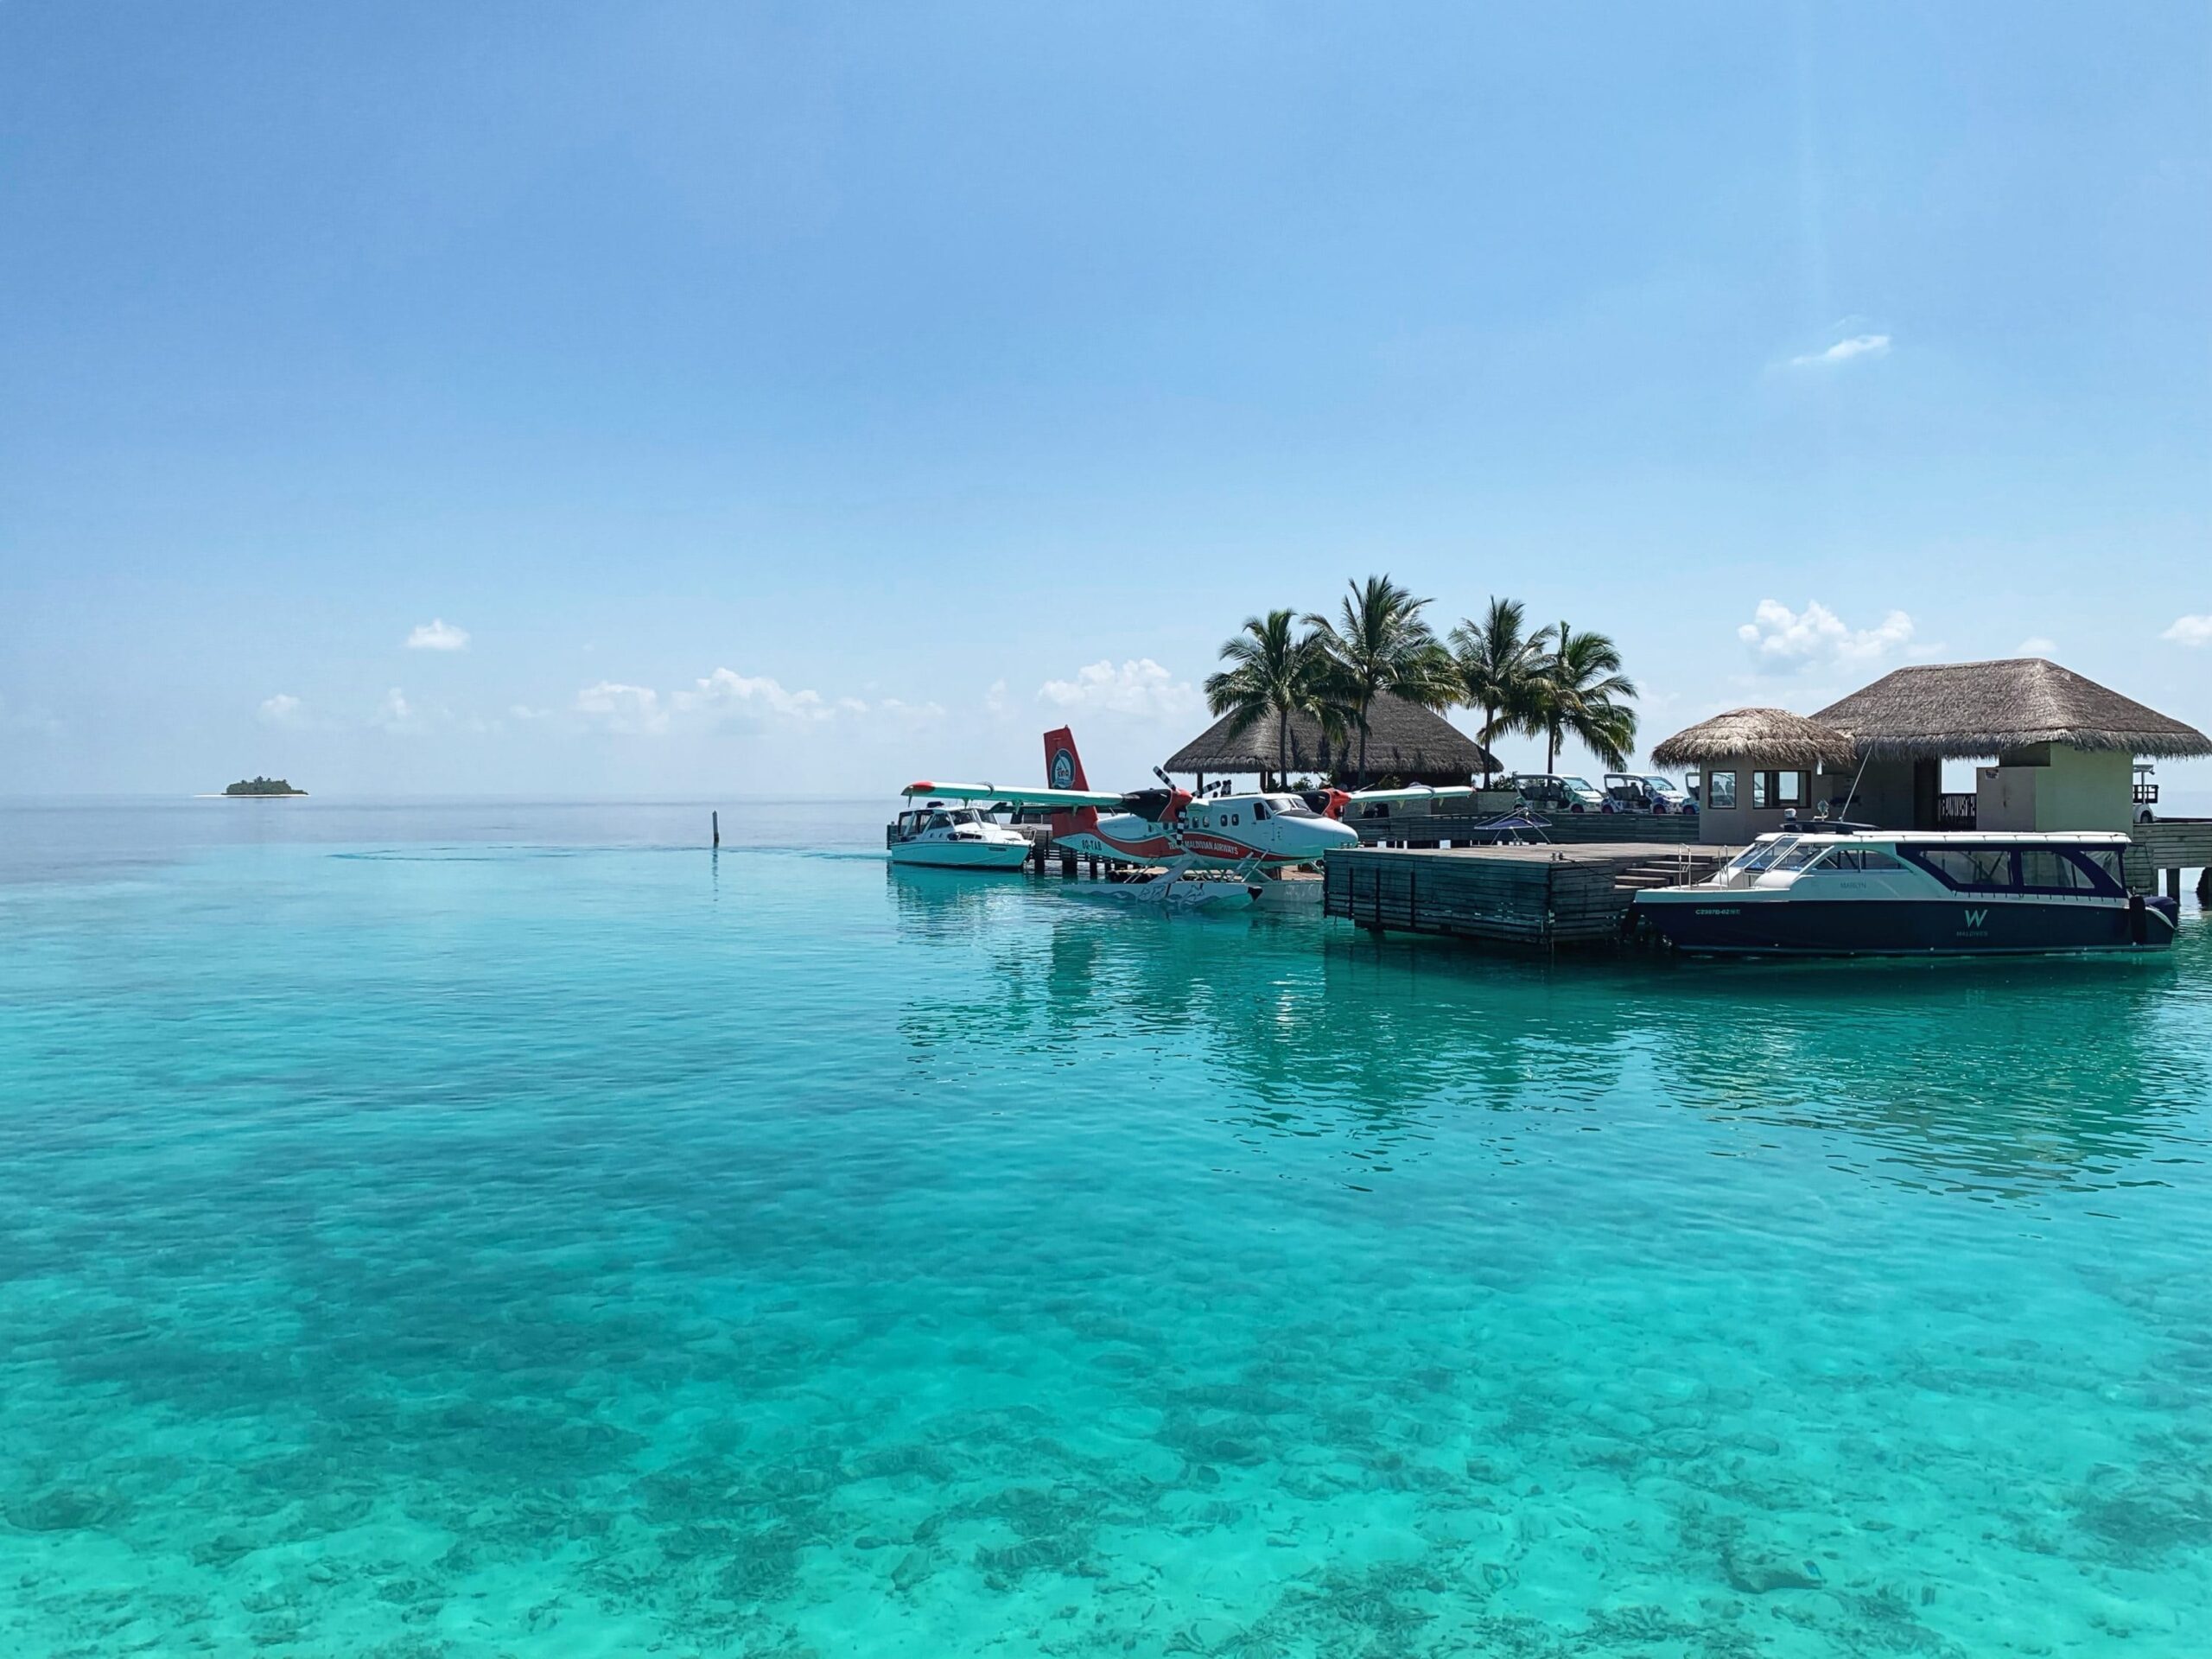 W Hotel luxury resort jetty in the Maldives